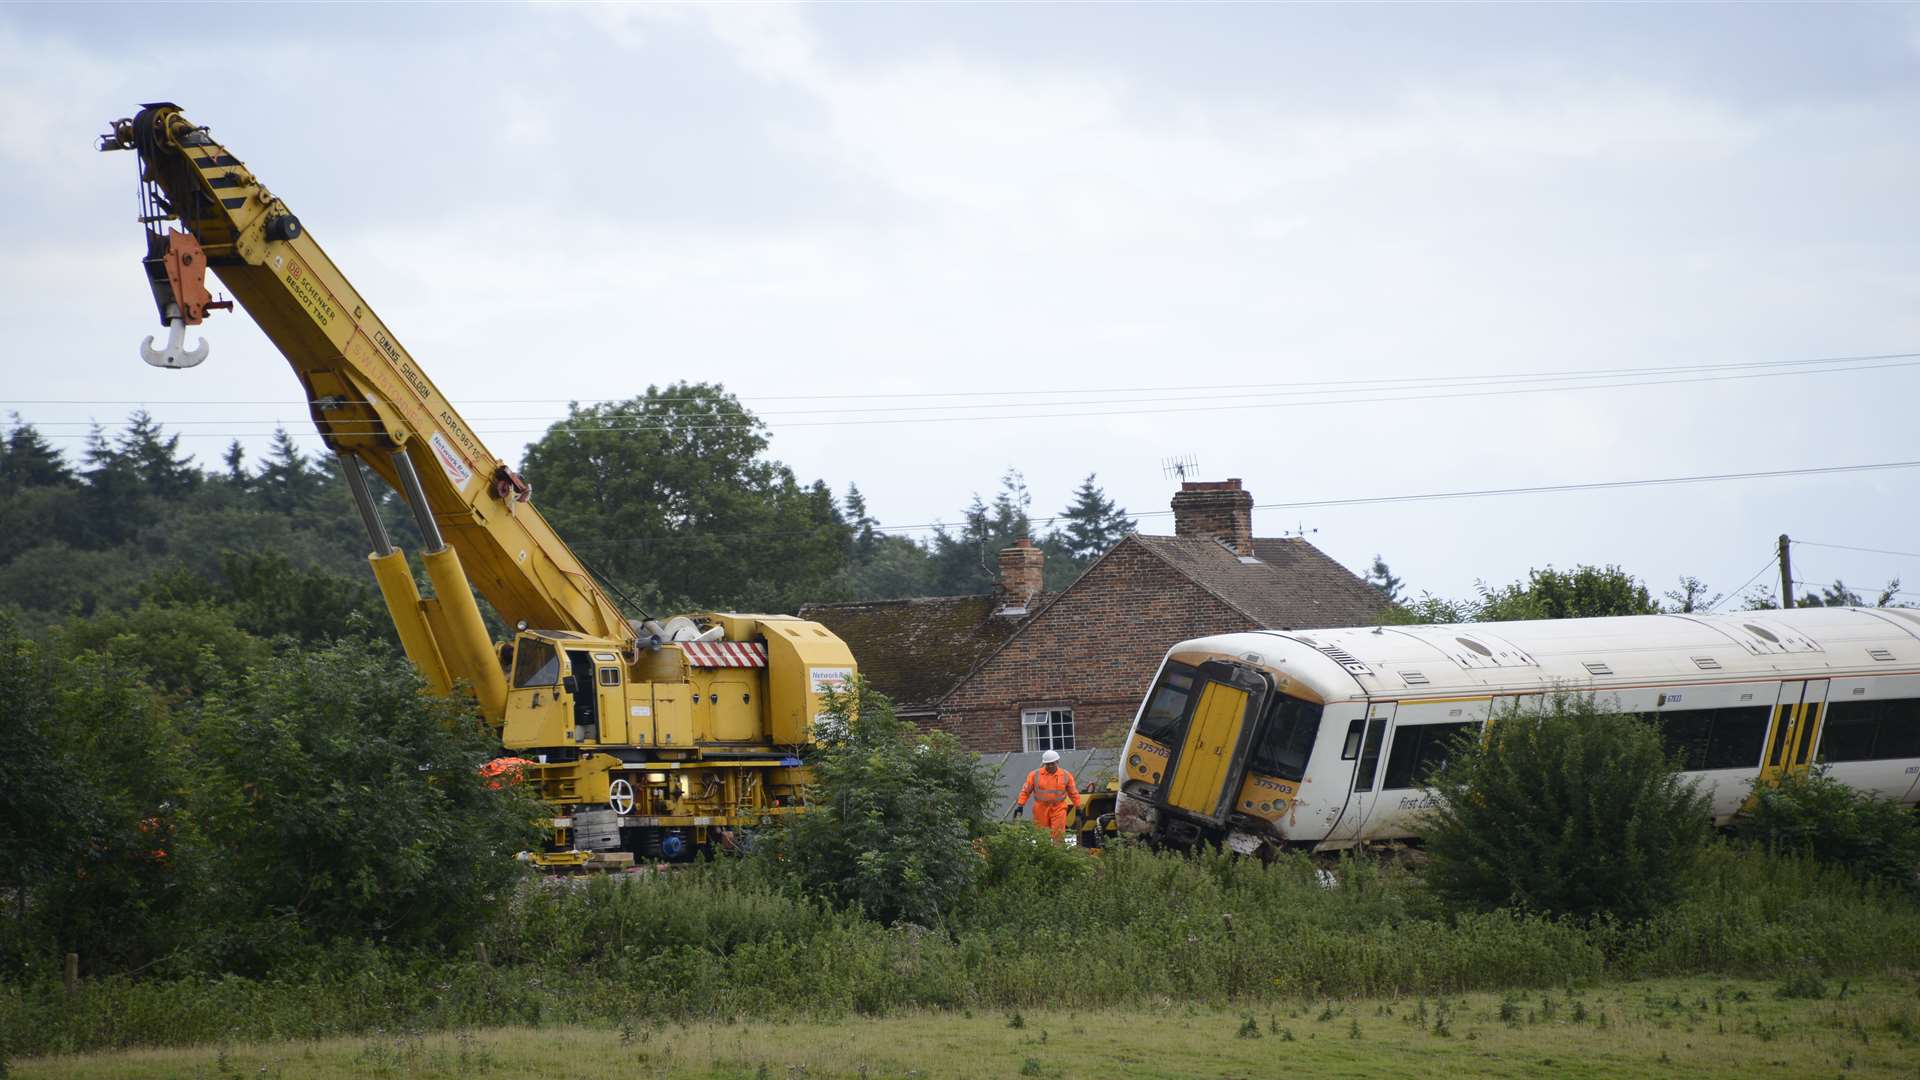 A crane lifted the derailed train back onto the tracks